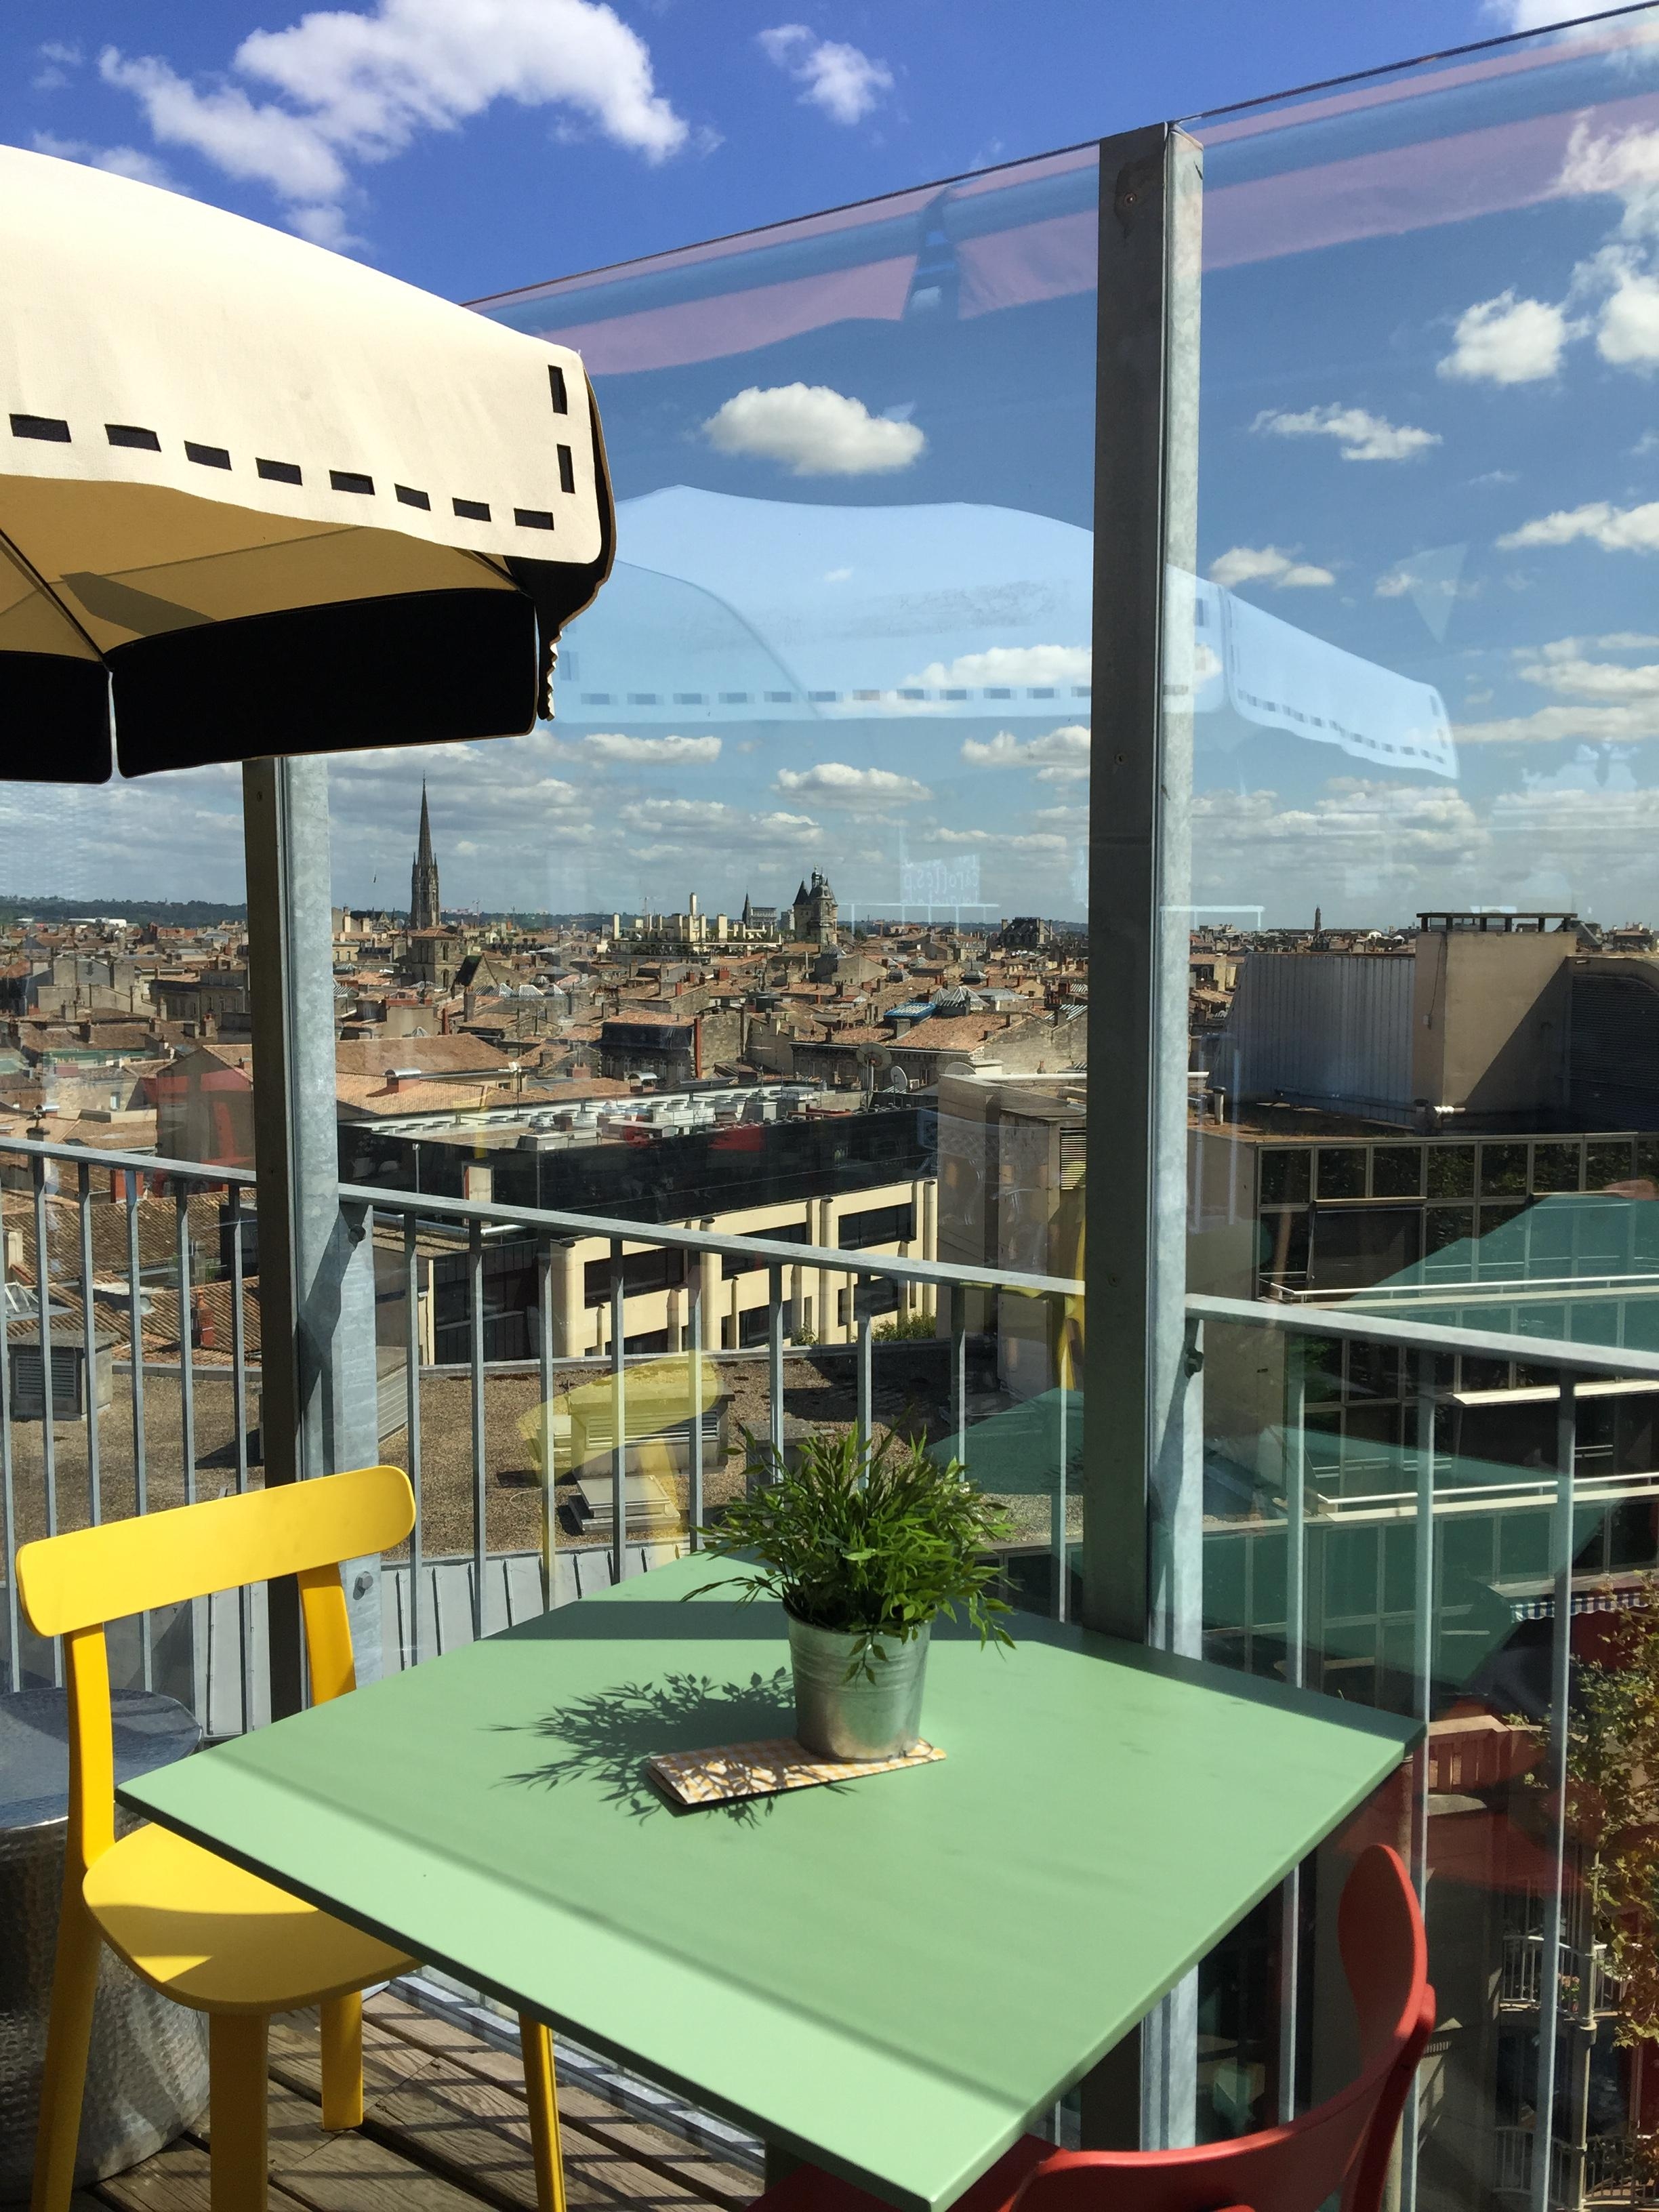 Lieblingsort in Bordeaux 😊 #rooftop #summerinthecity #frankreich #couchliebt